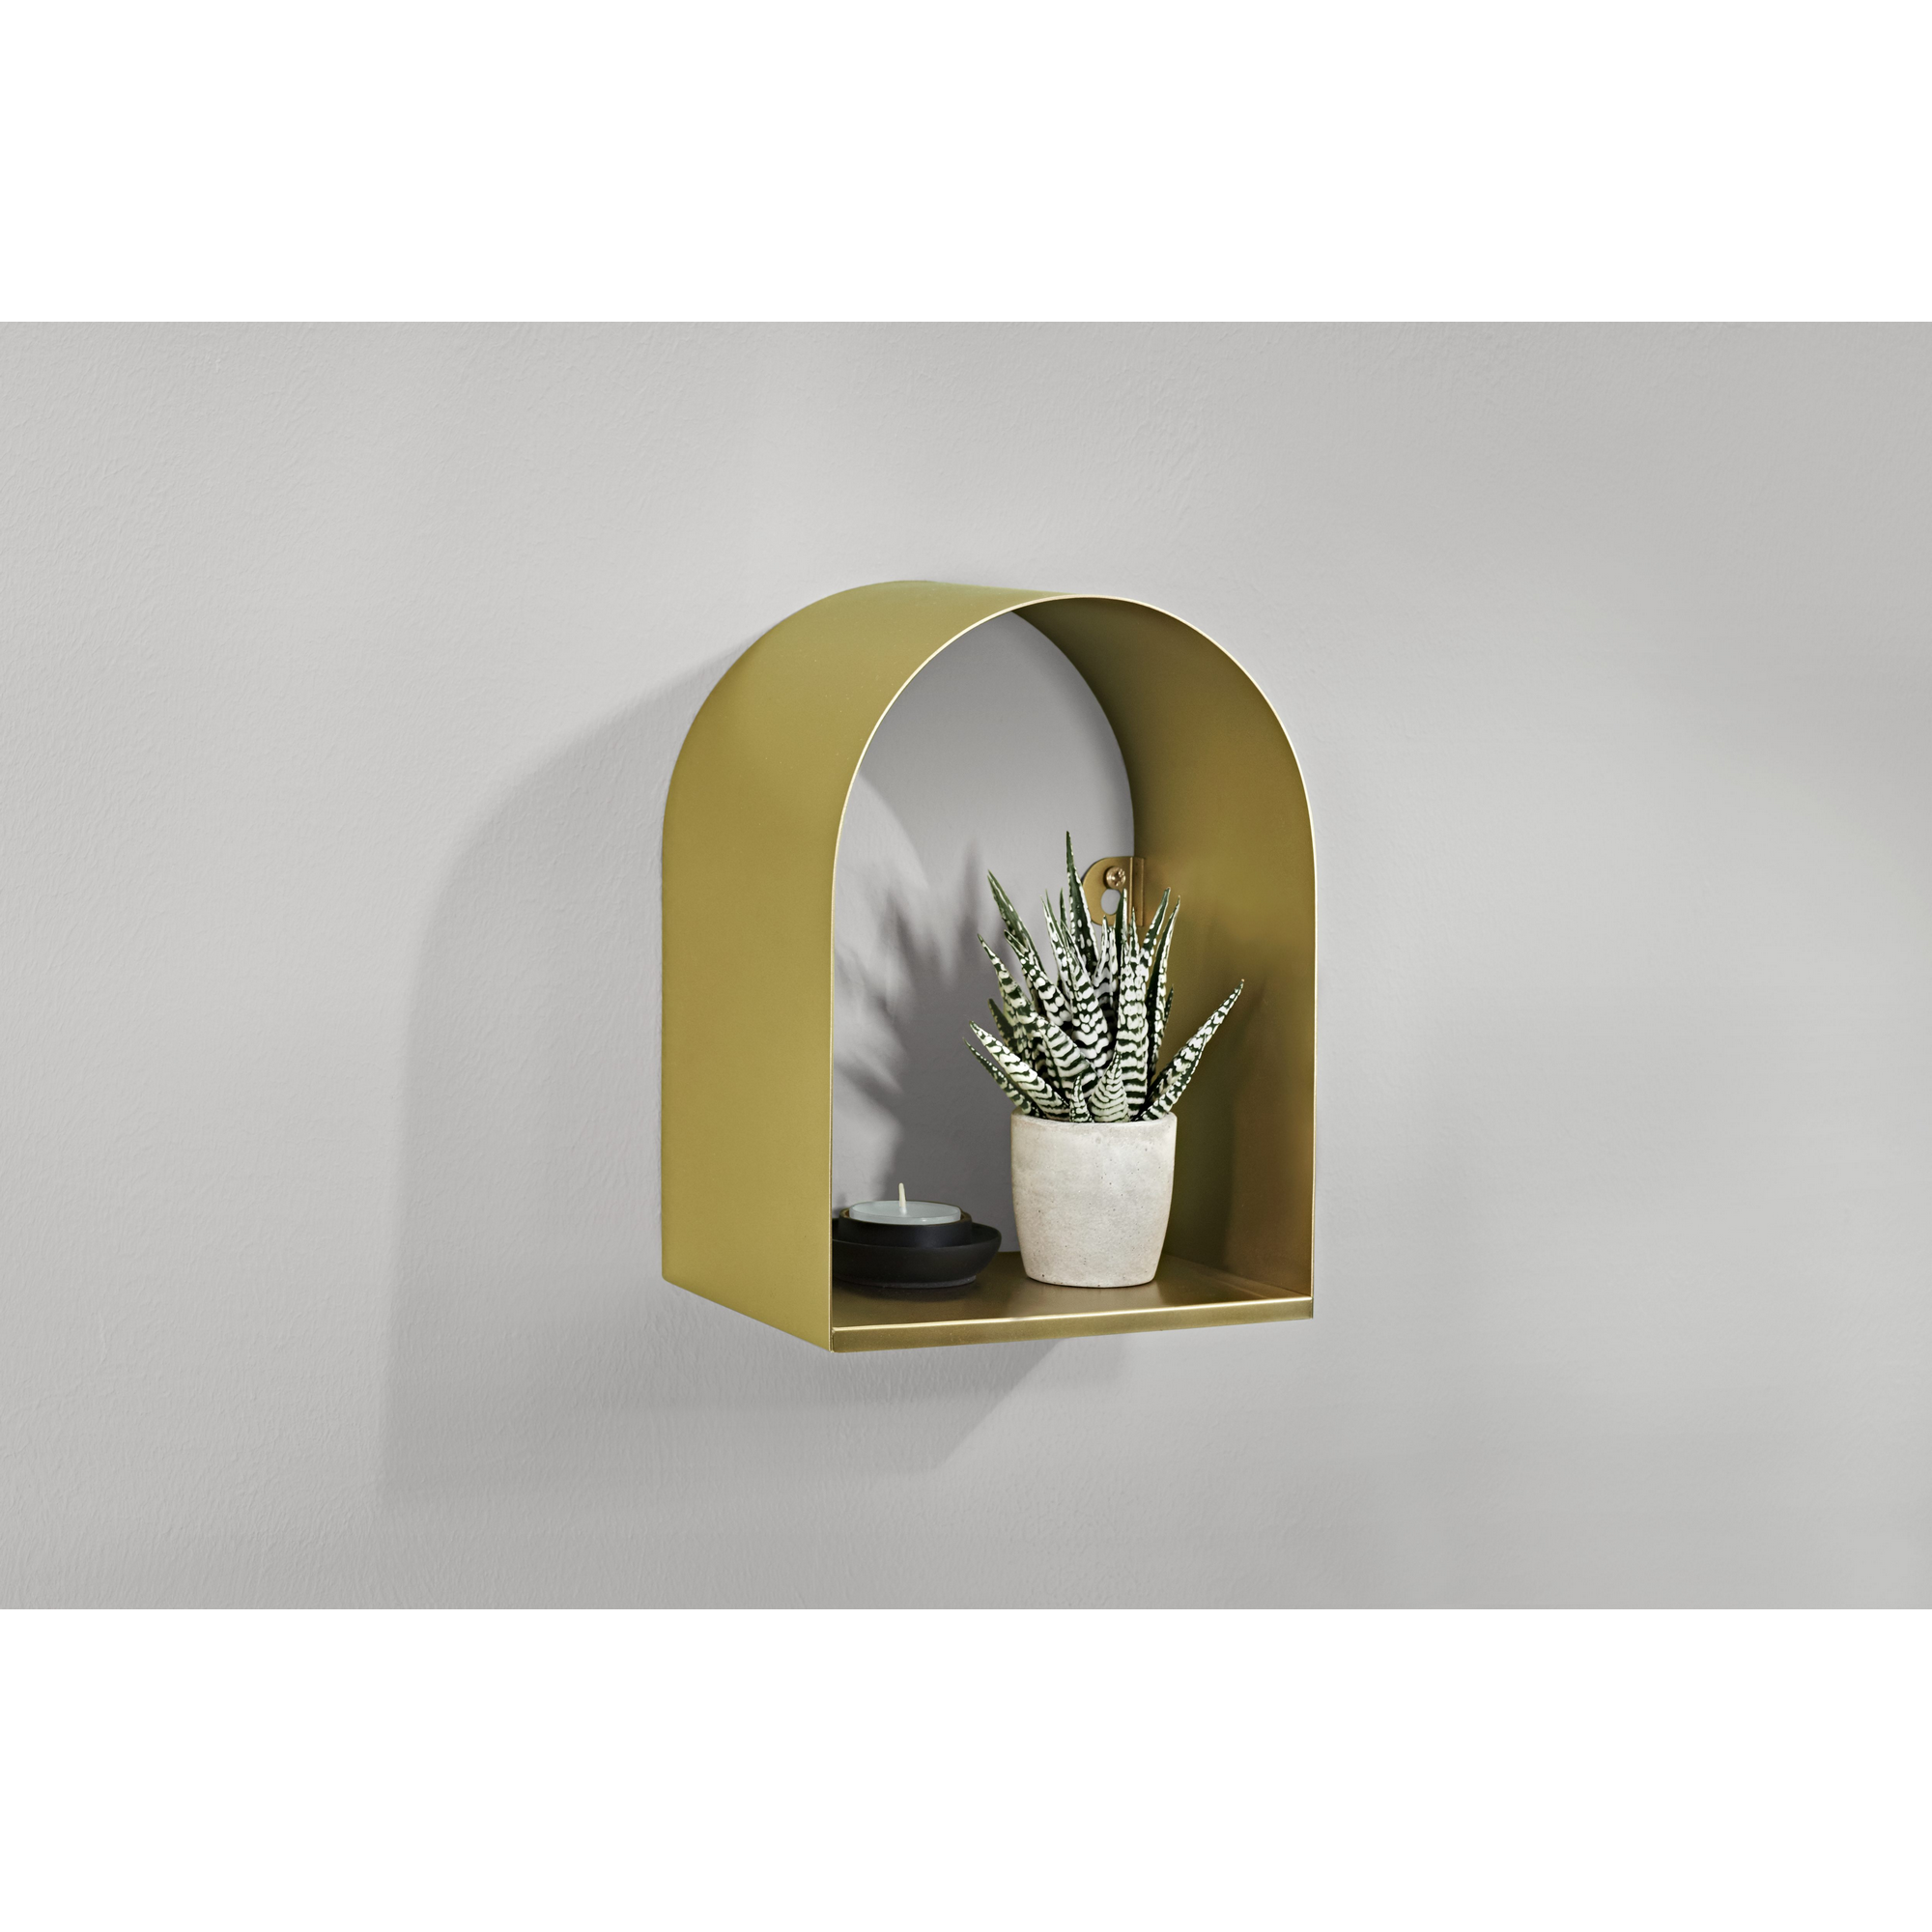 Wandregal 'Shelf+ Lido' gold 250 x 200 x 120 mm + product picture